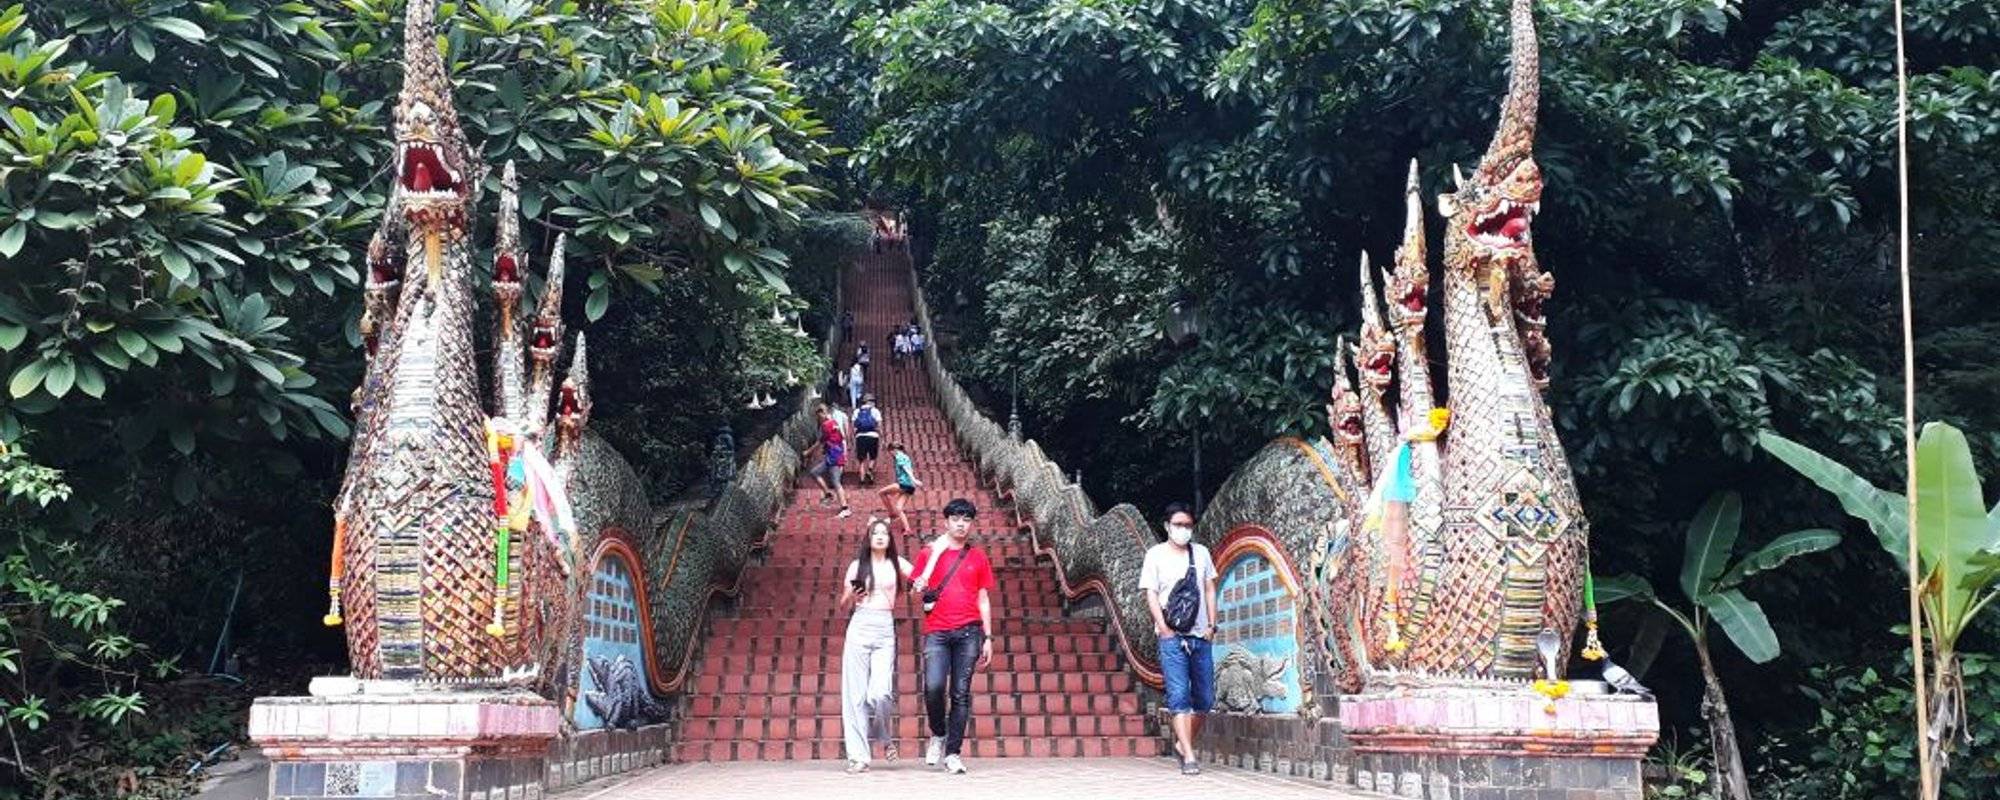 Travel Pro Places of Interest #220: Wat Doi Suthep, Chiang Mai Thailand! Part One (9 photos)